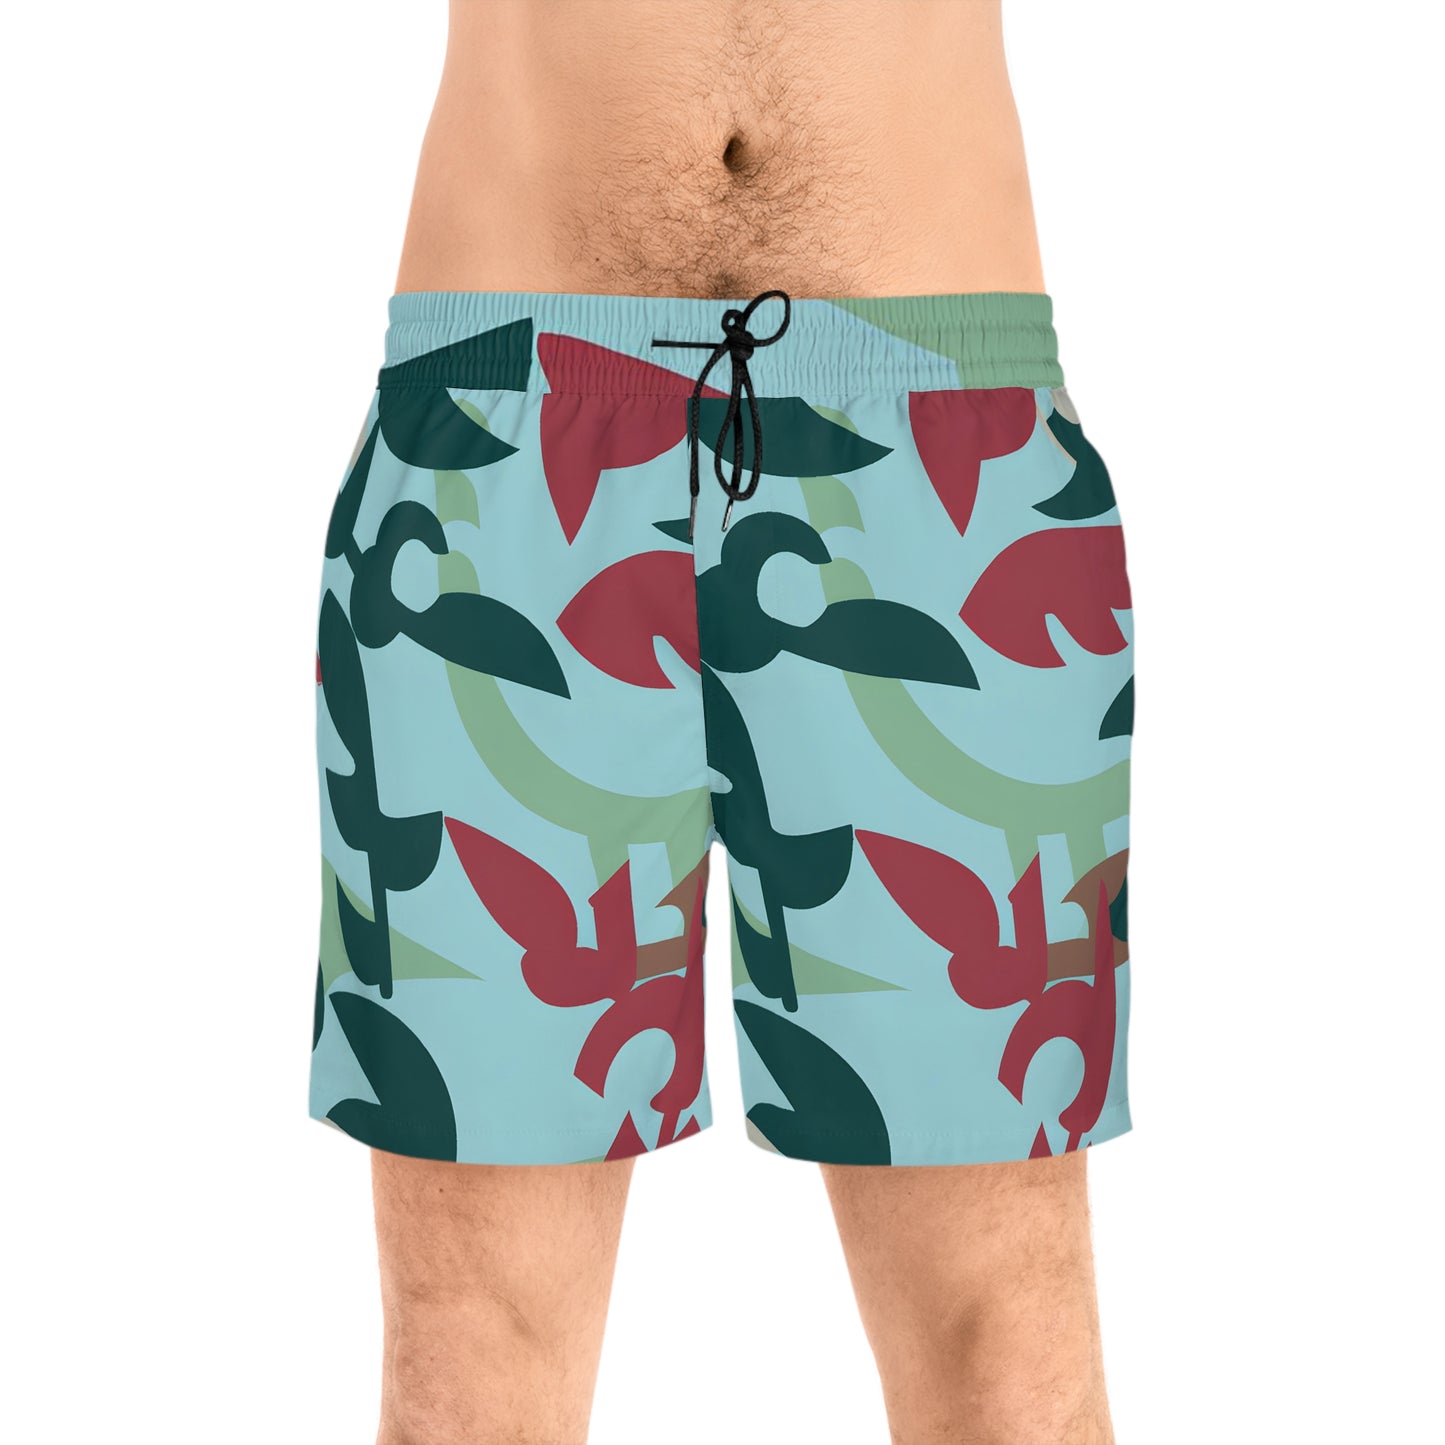 Chaparral Ione - Men's Mid-Length Swim Shorts